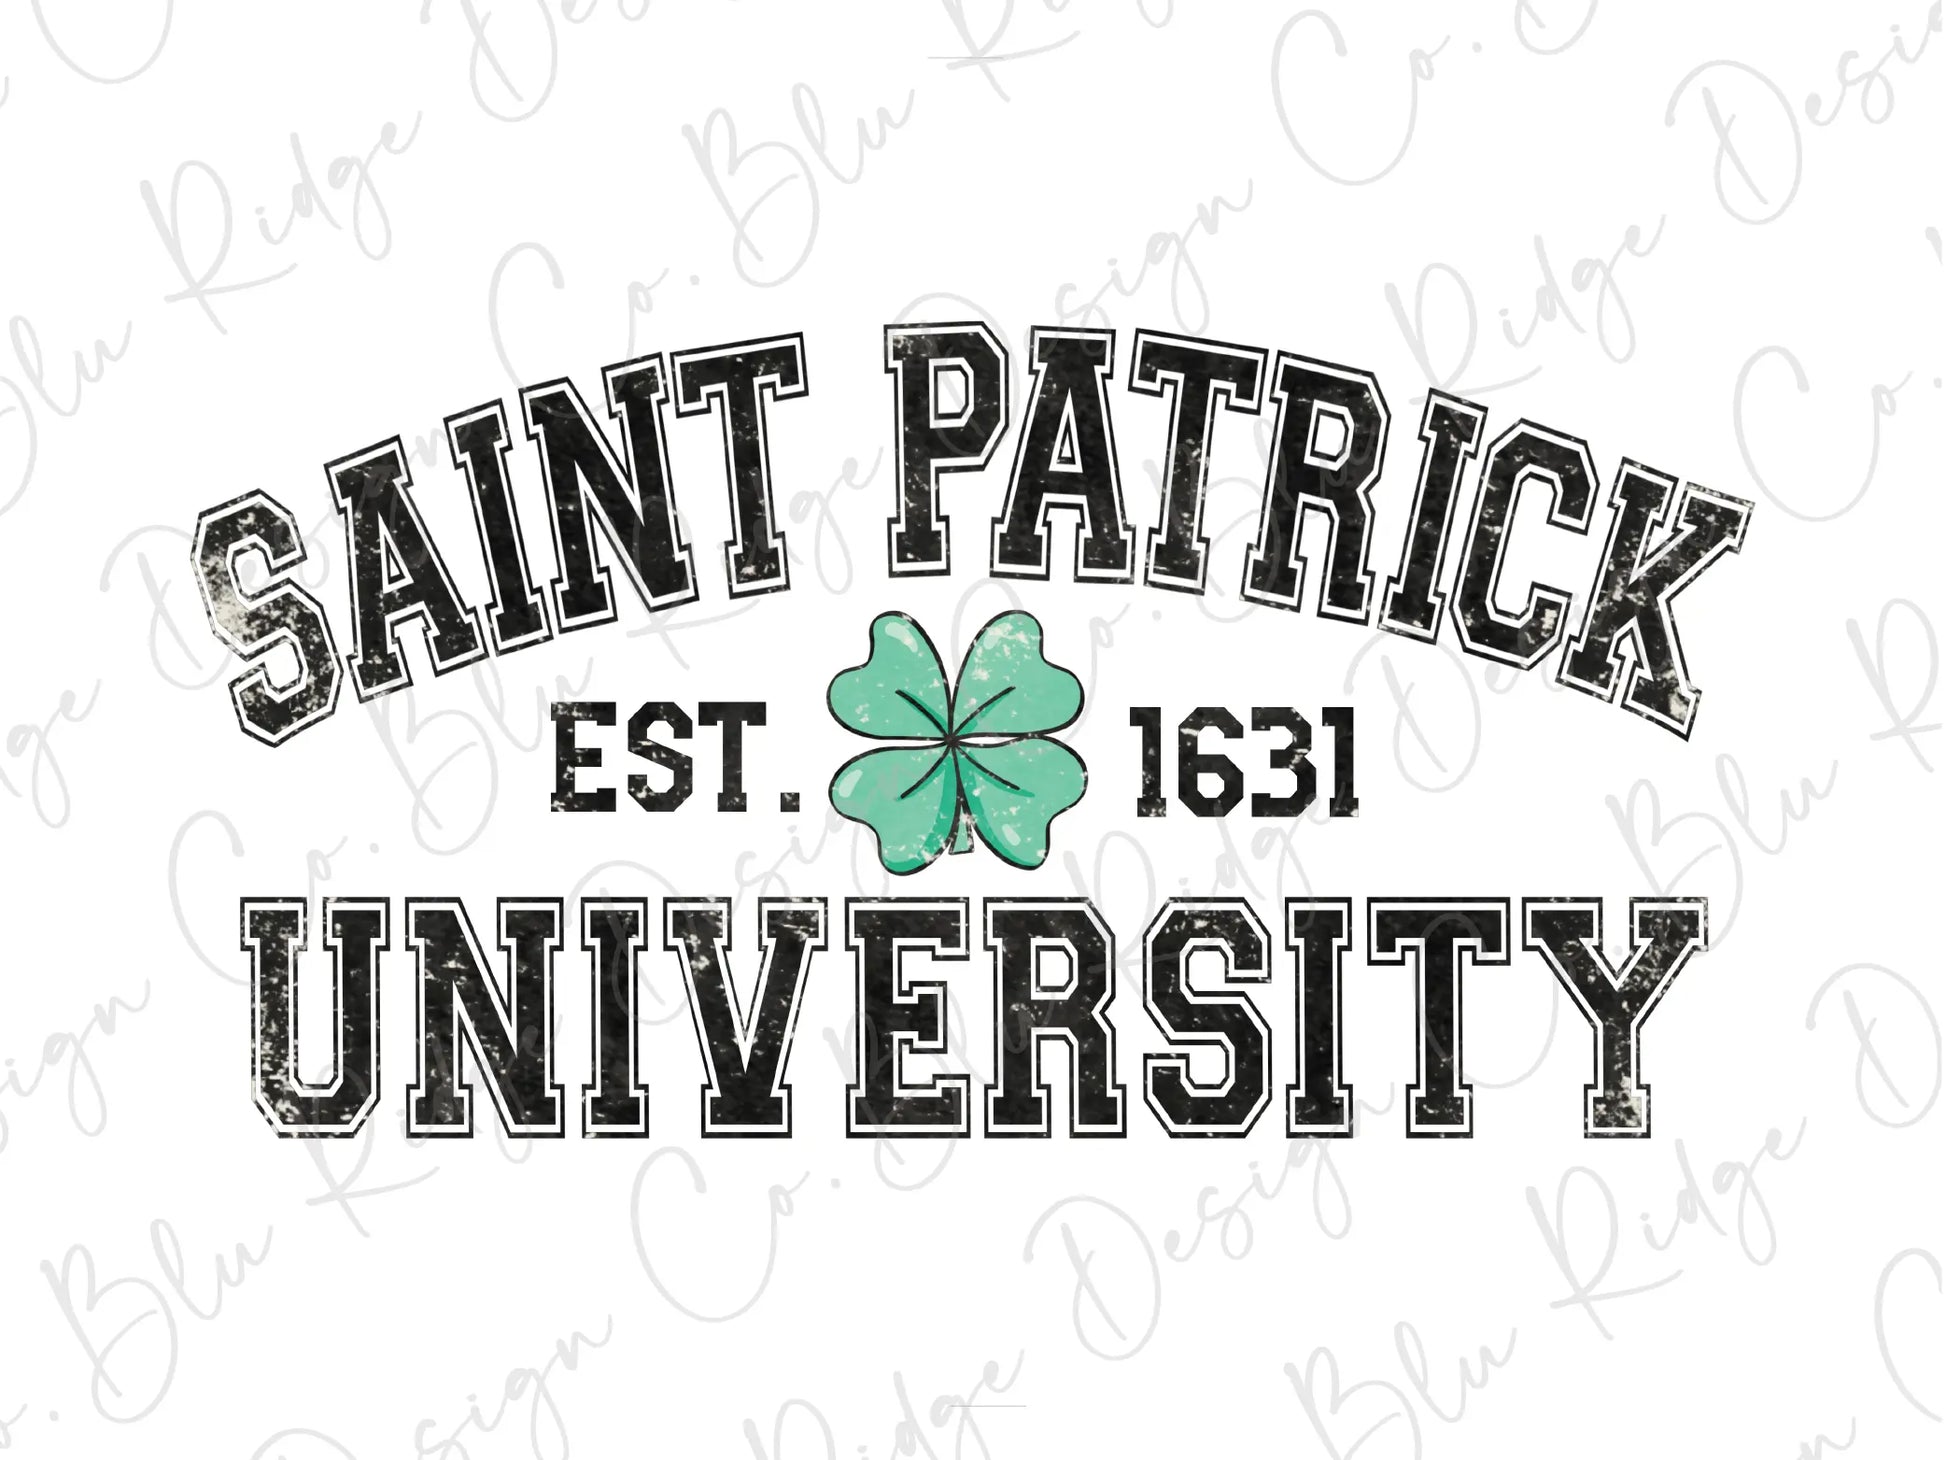 saint patrick university with a clover on it